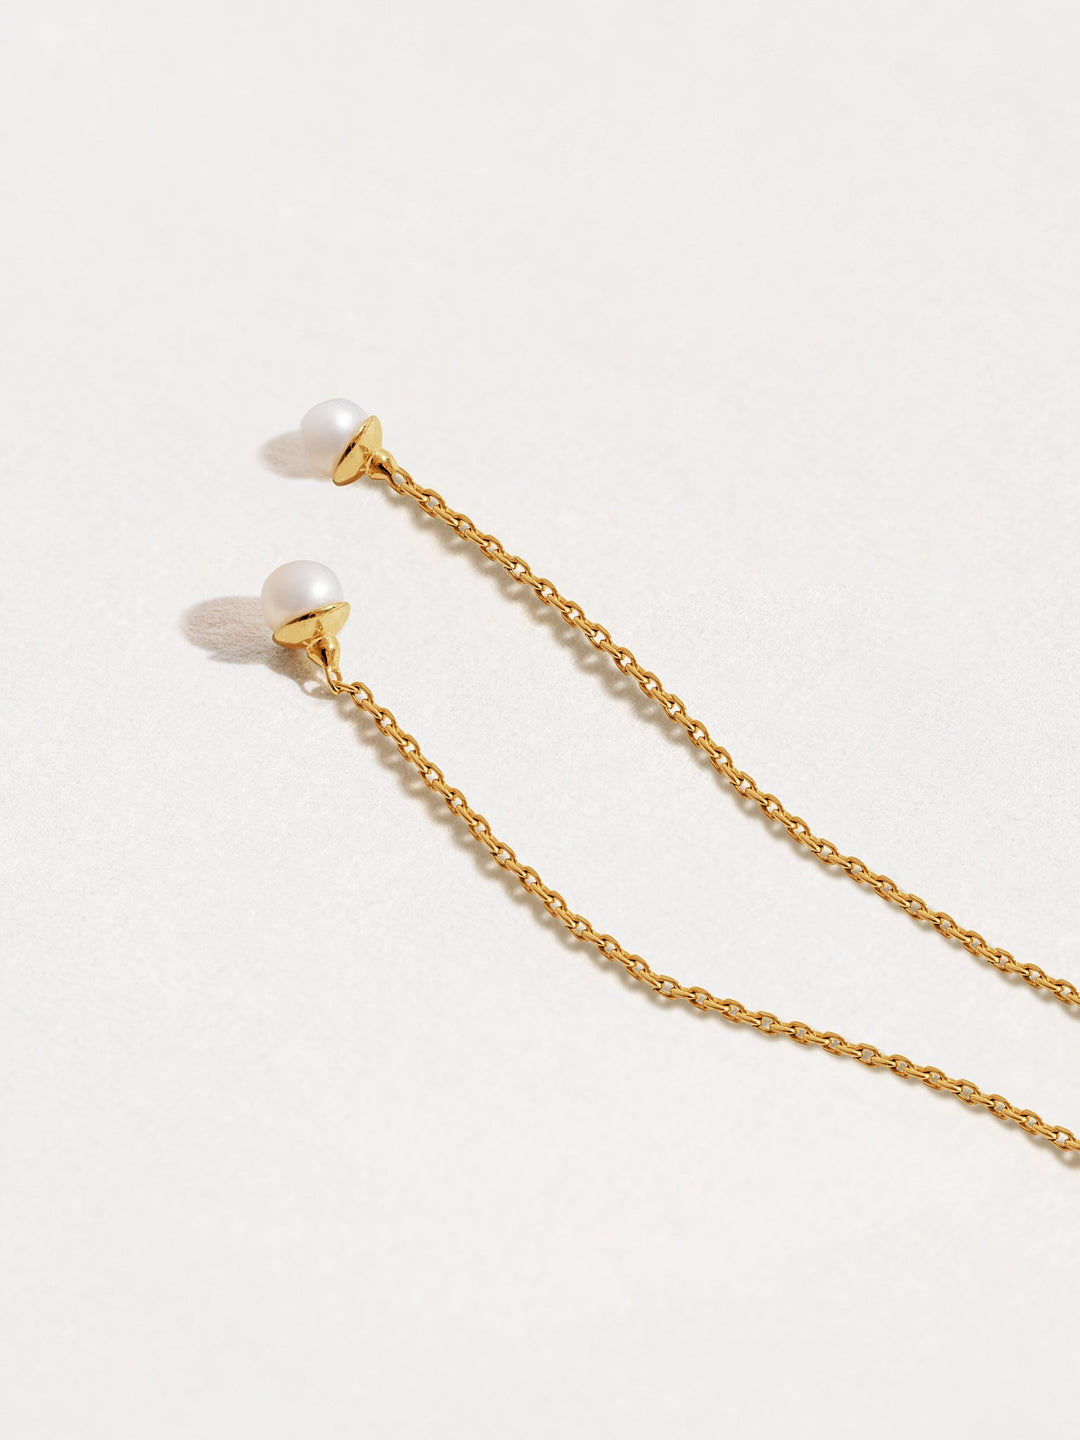 Ullyna Small Pearl Ear Thread Earrings - St Silver 5mm10Aesthetic JewelryBaroque PearlsLunai Jewelry